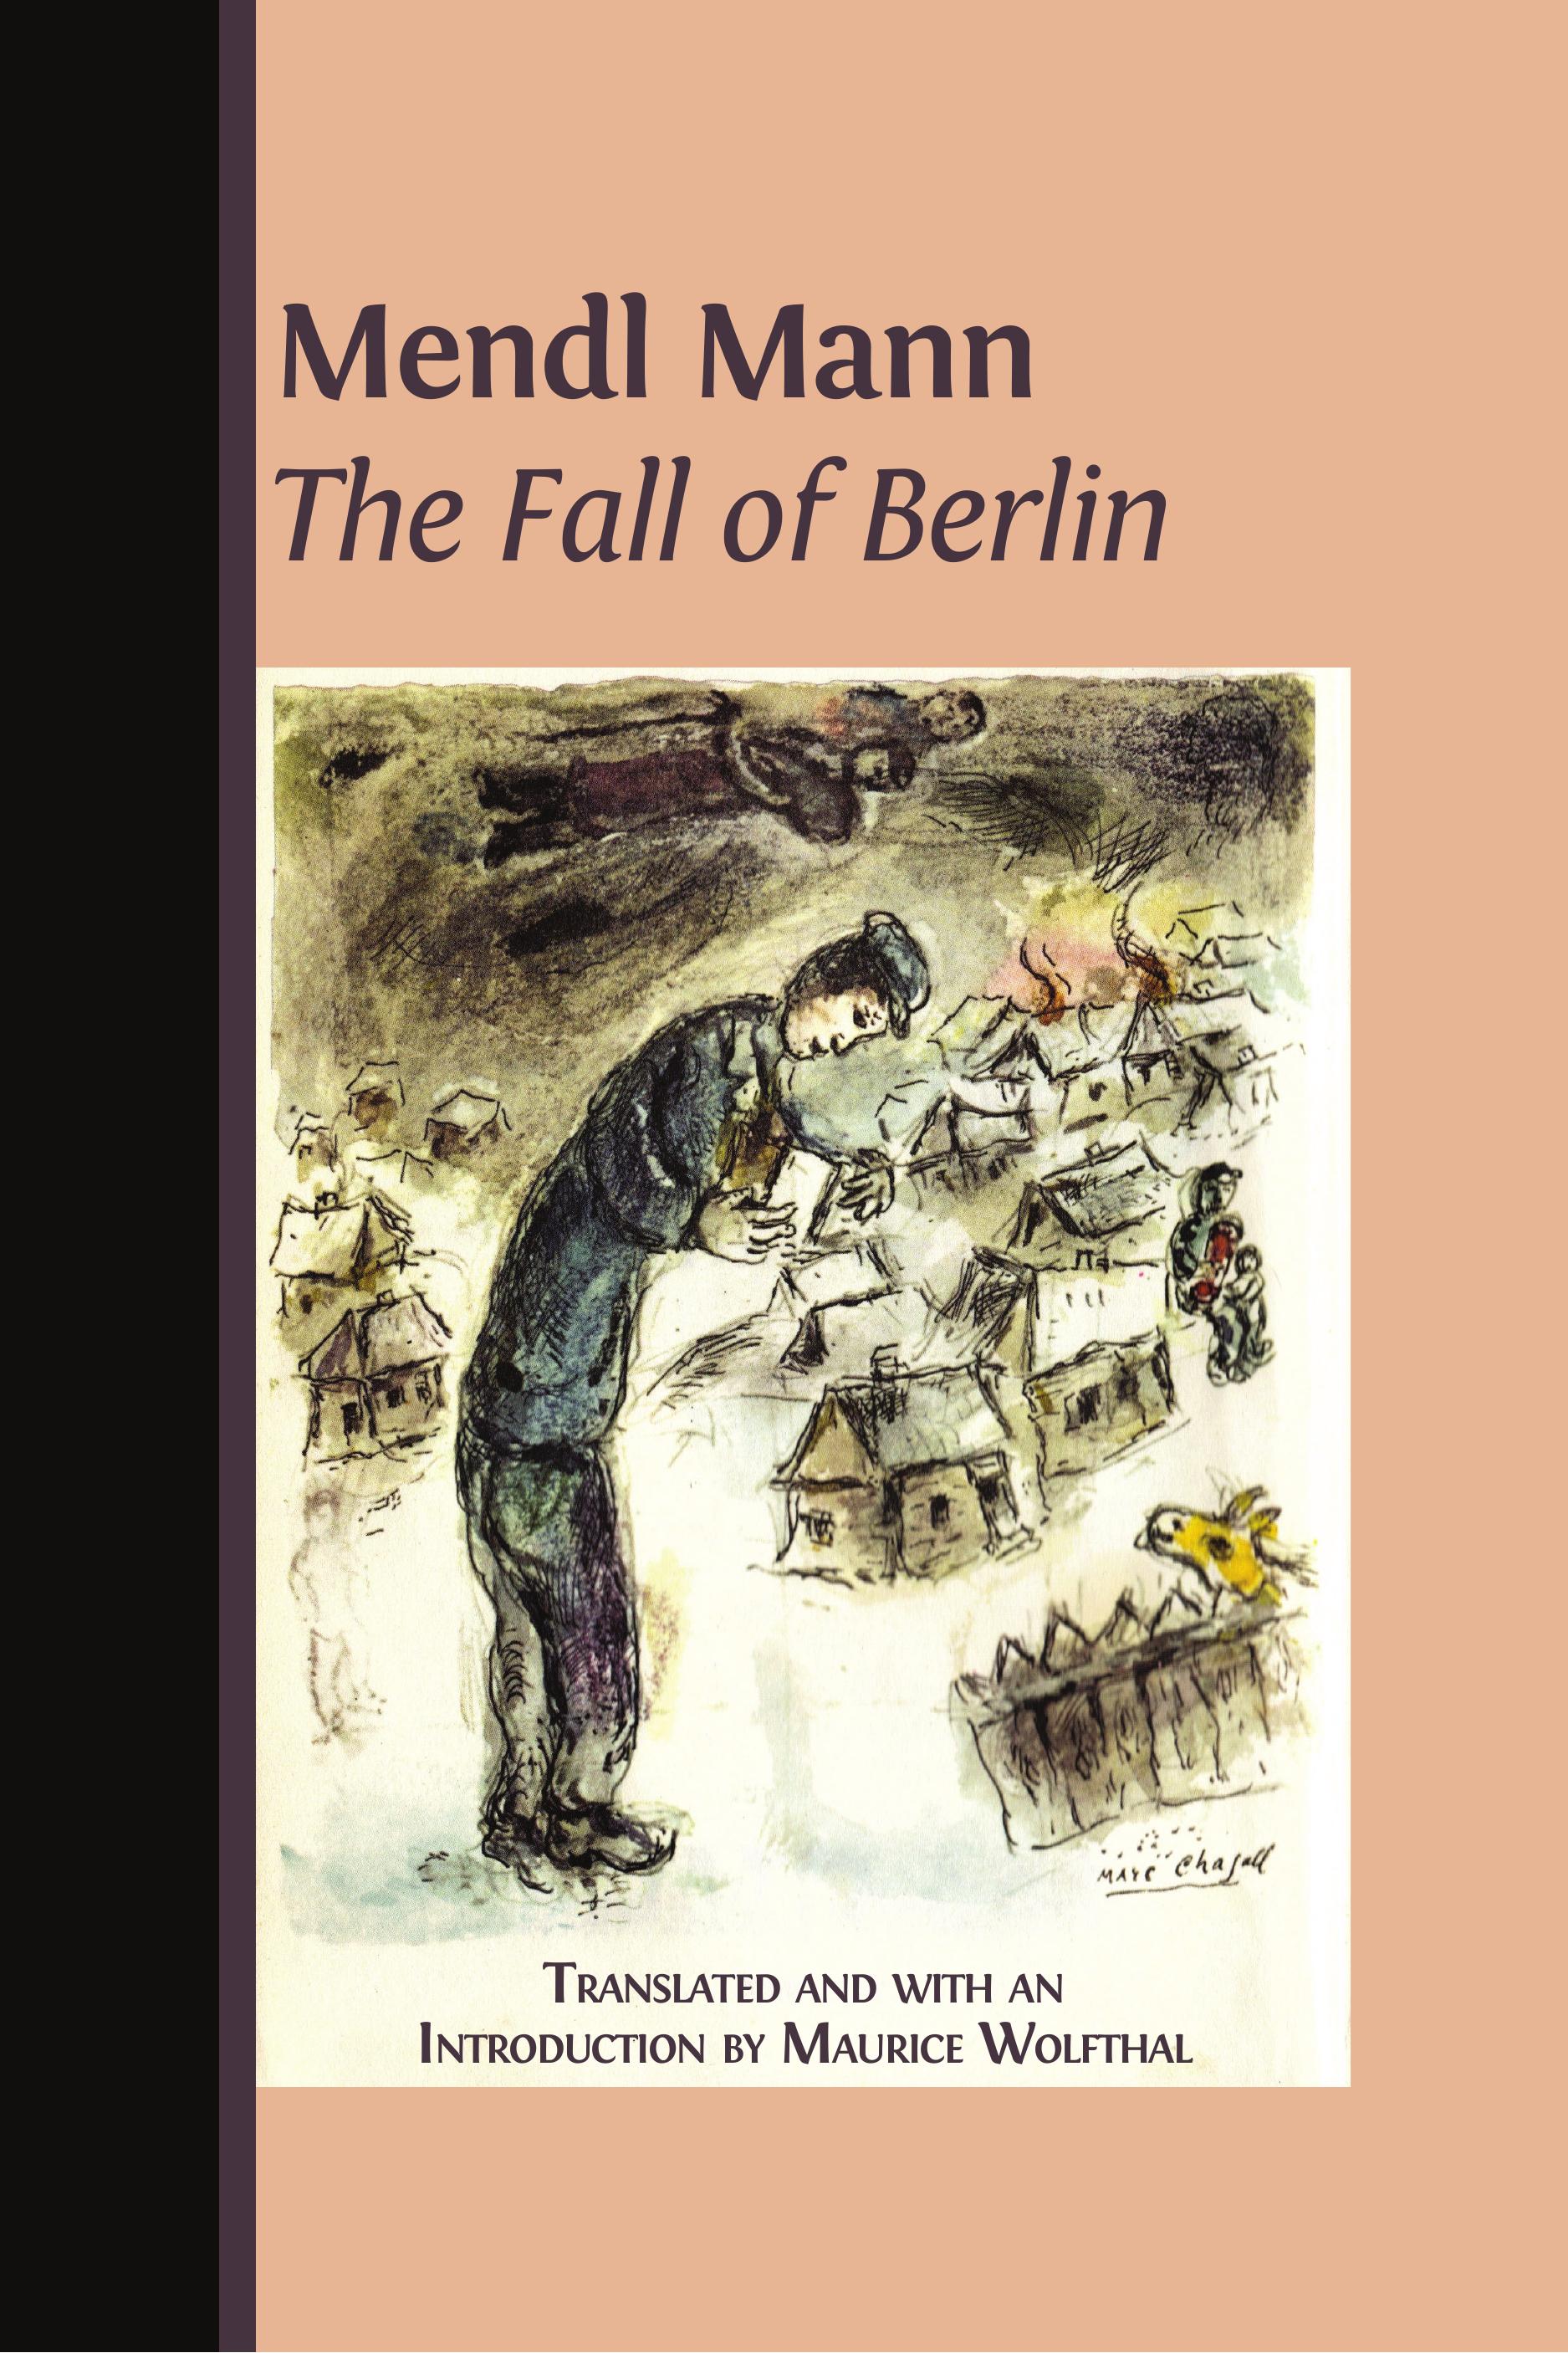 Mendl Mann’s 'The Fall of Berlin'